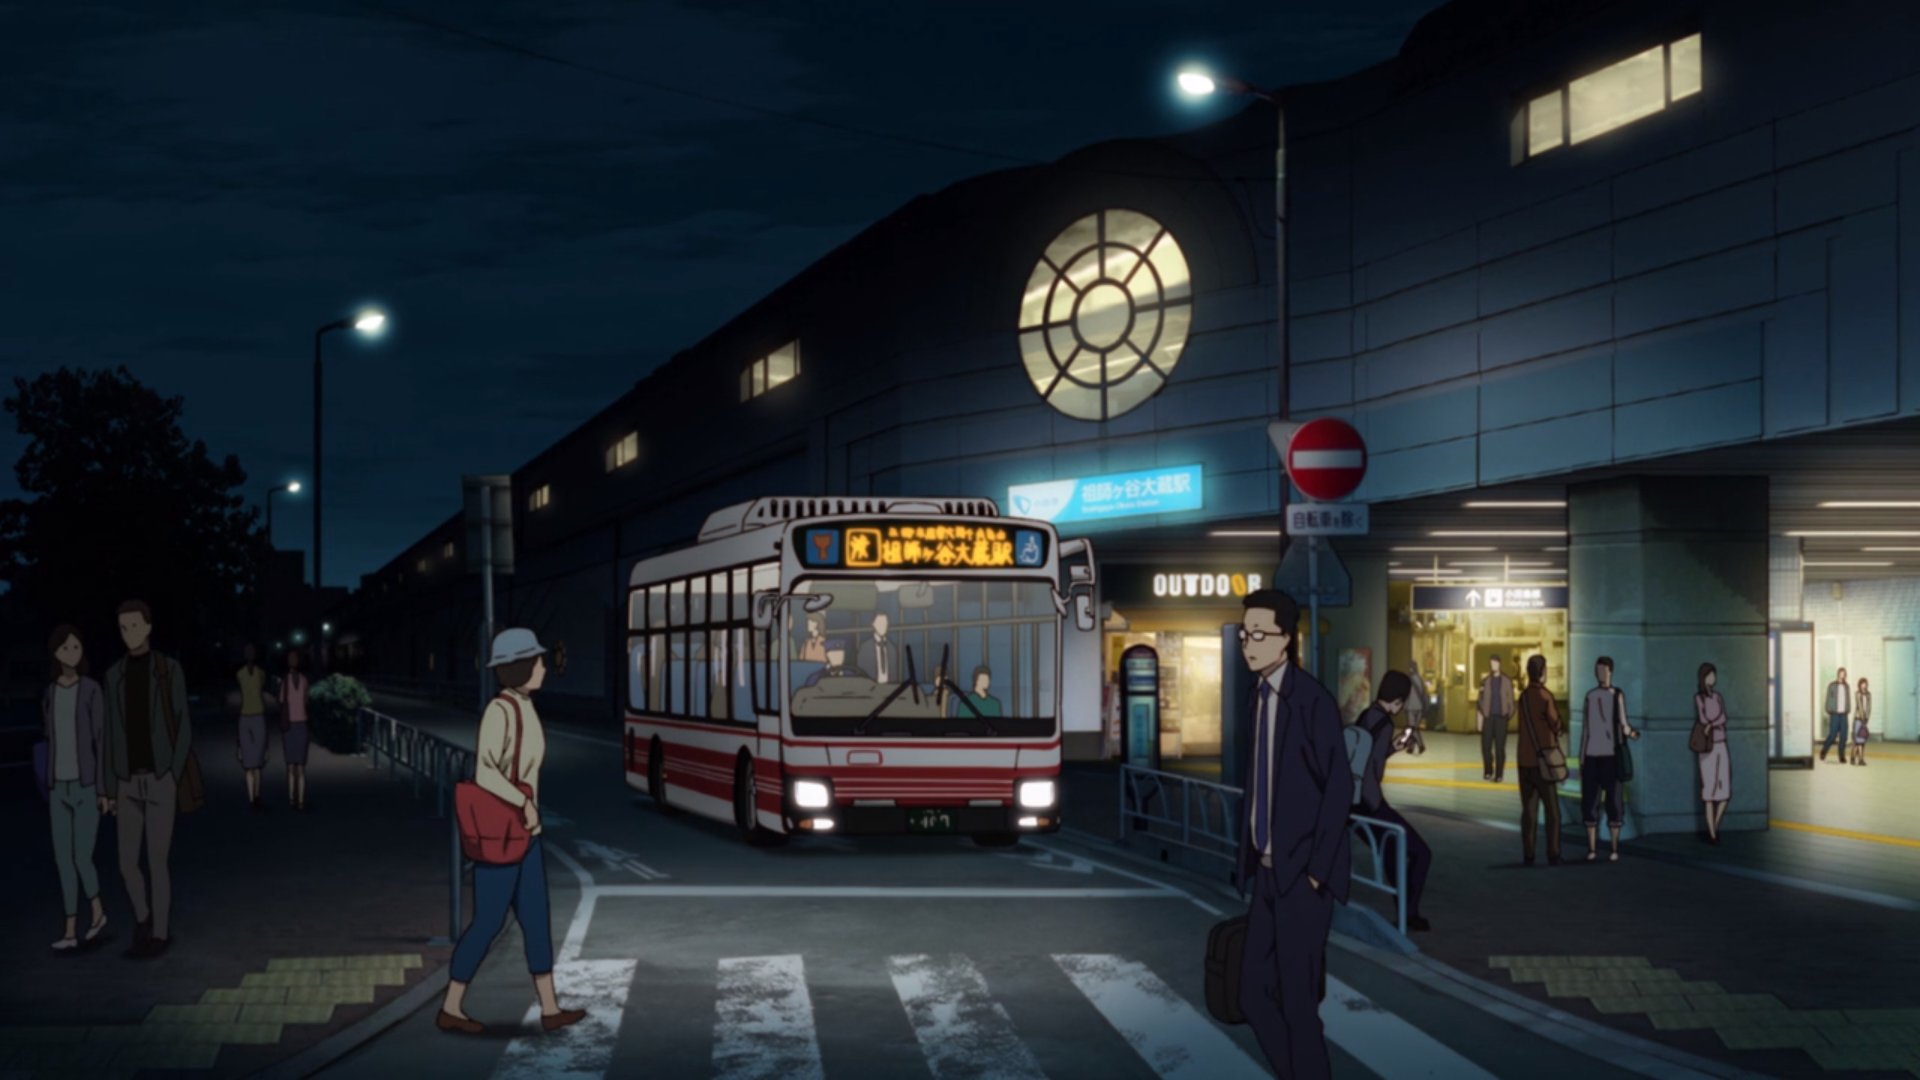 Japan's themed trains break the monotony of public transport | by Yaseen  Hijazi | Medium